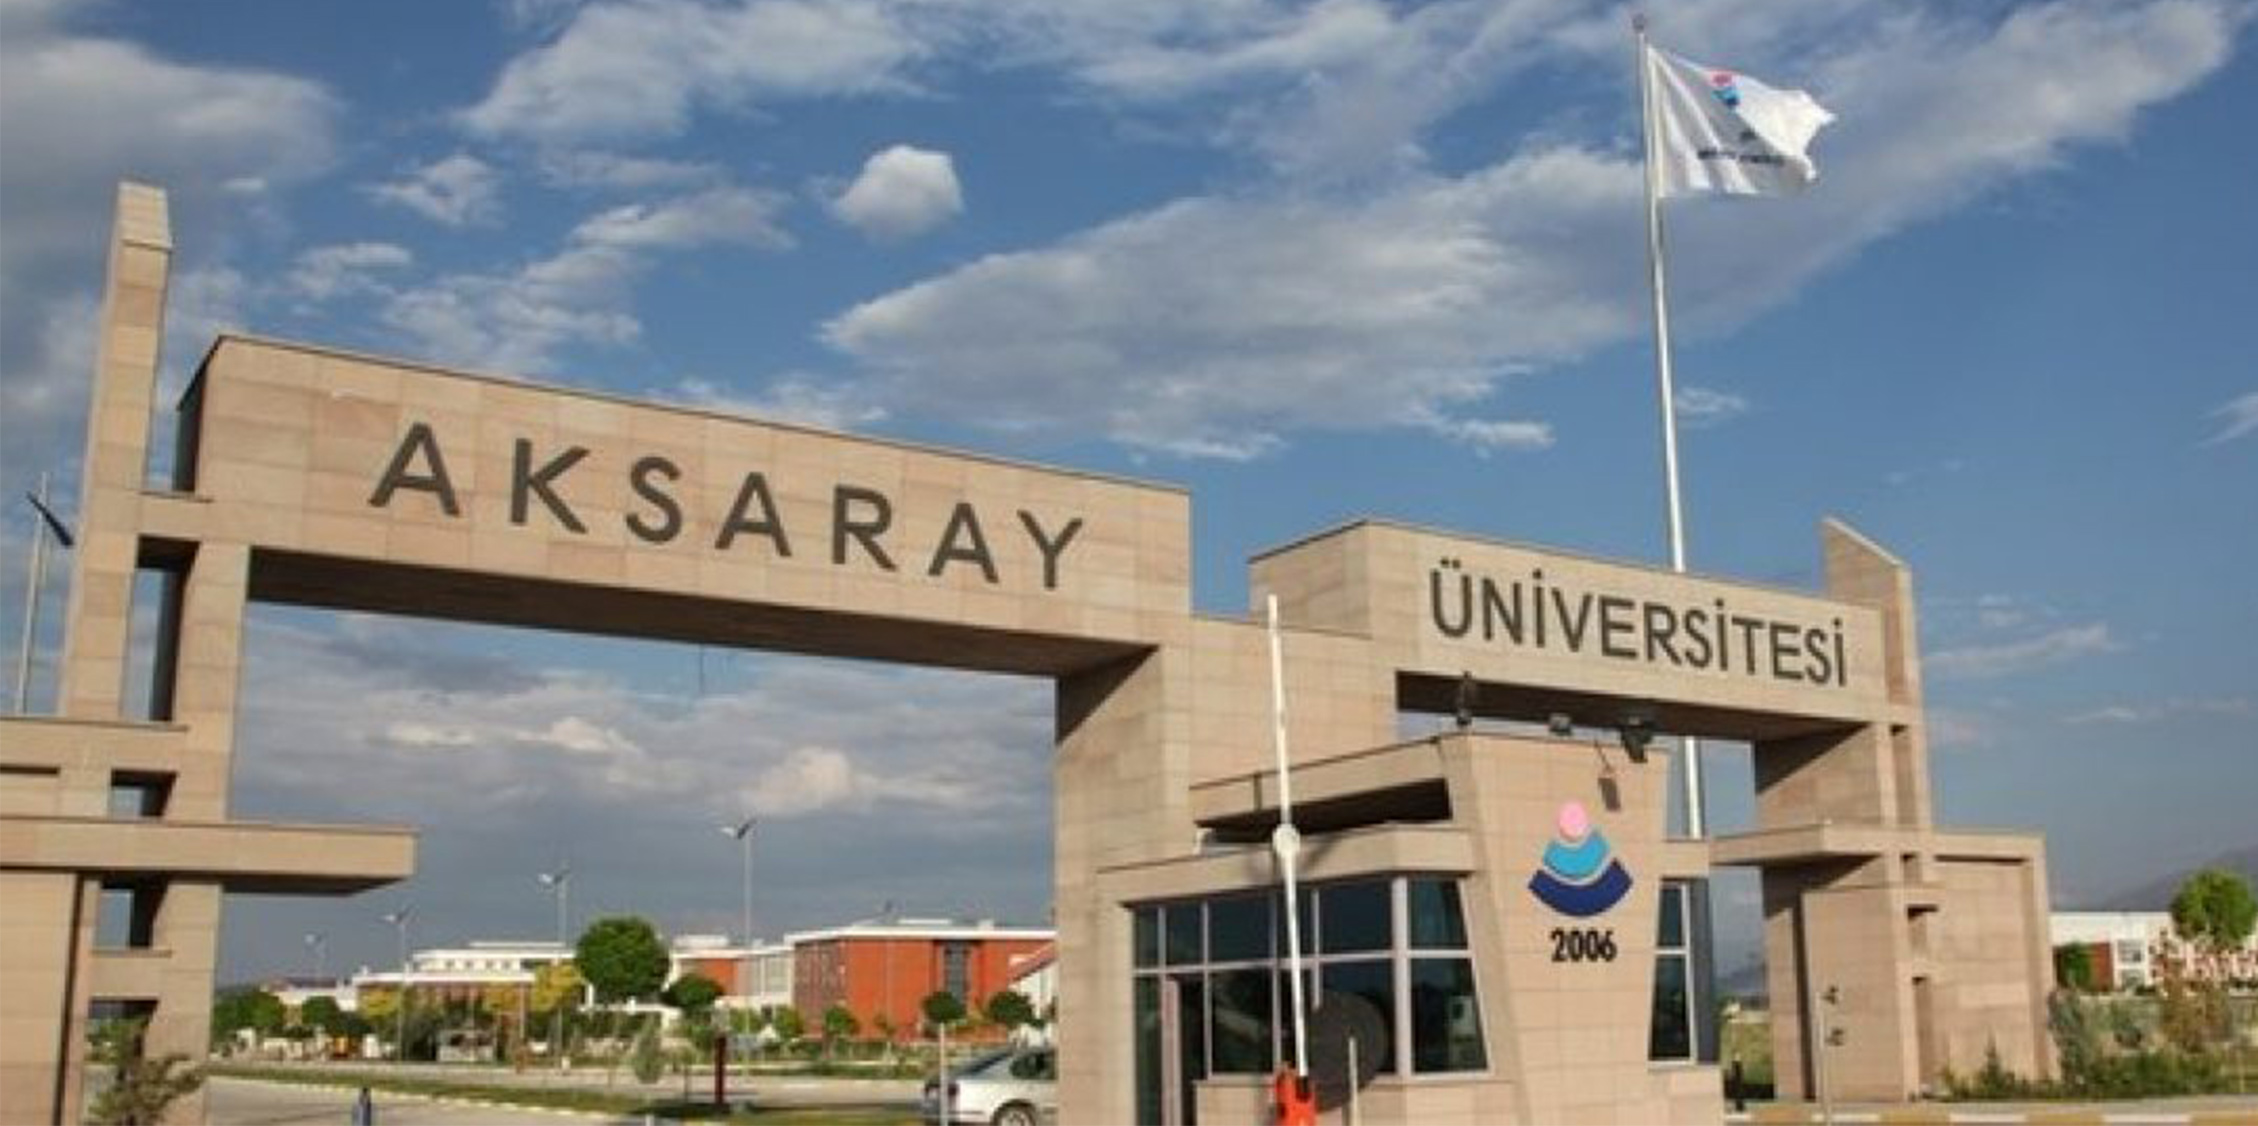 aksaray universitesi find and study 1 - Aksaray Universiteti